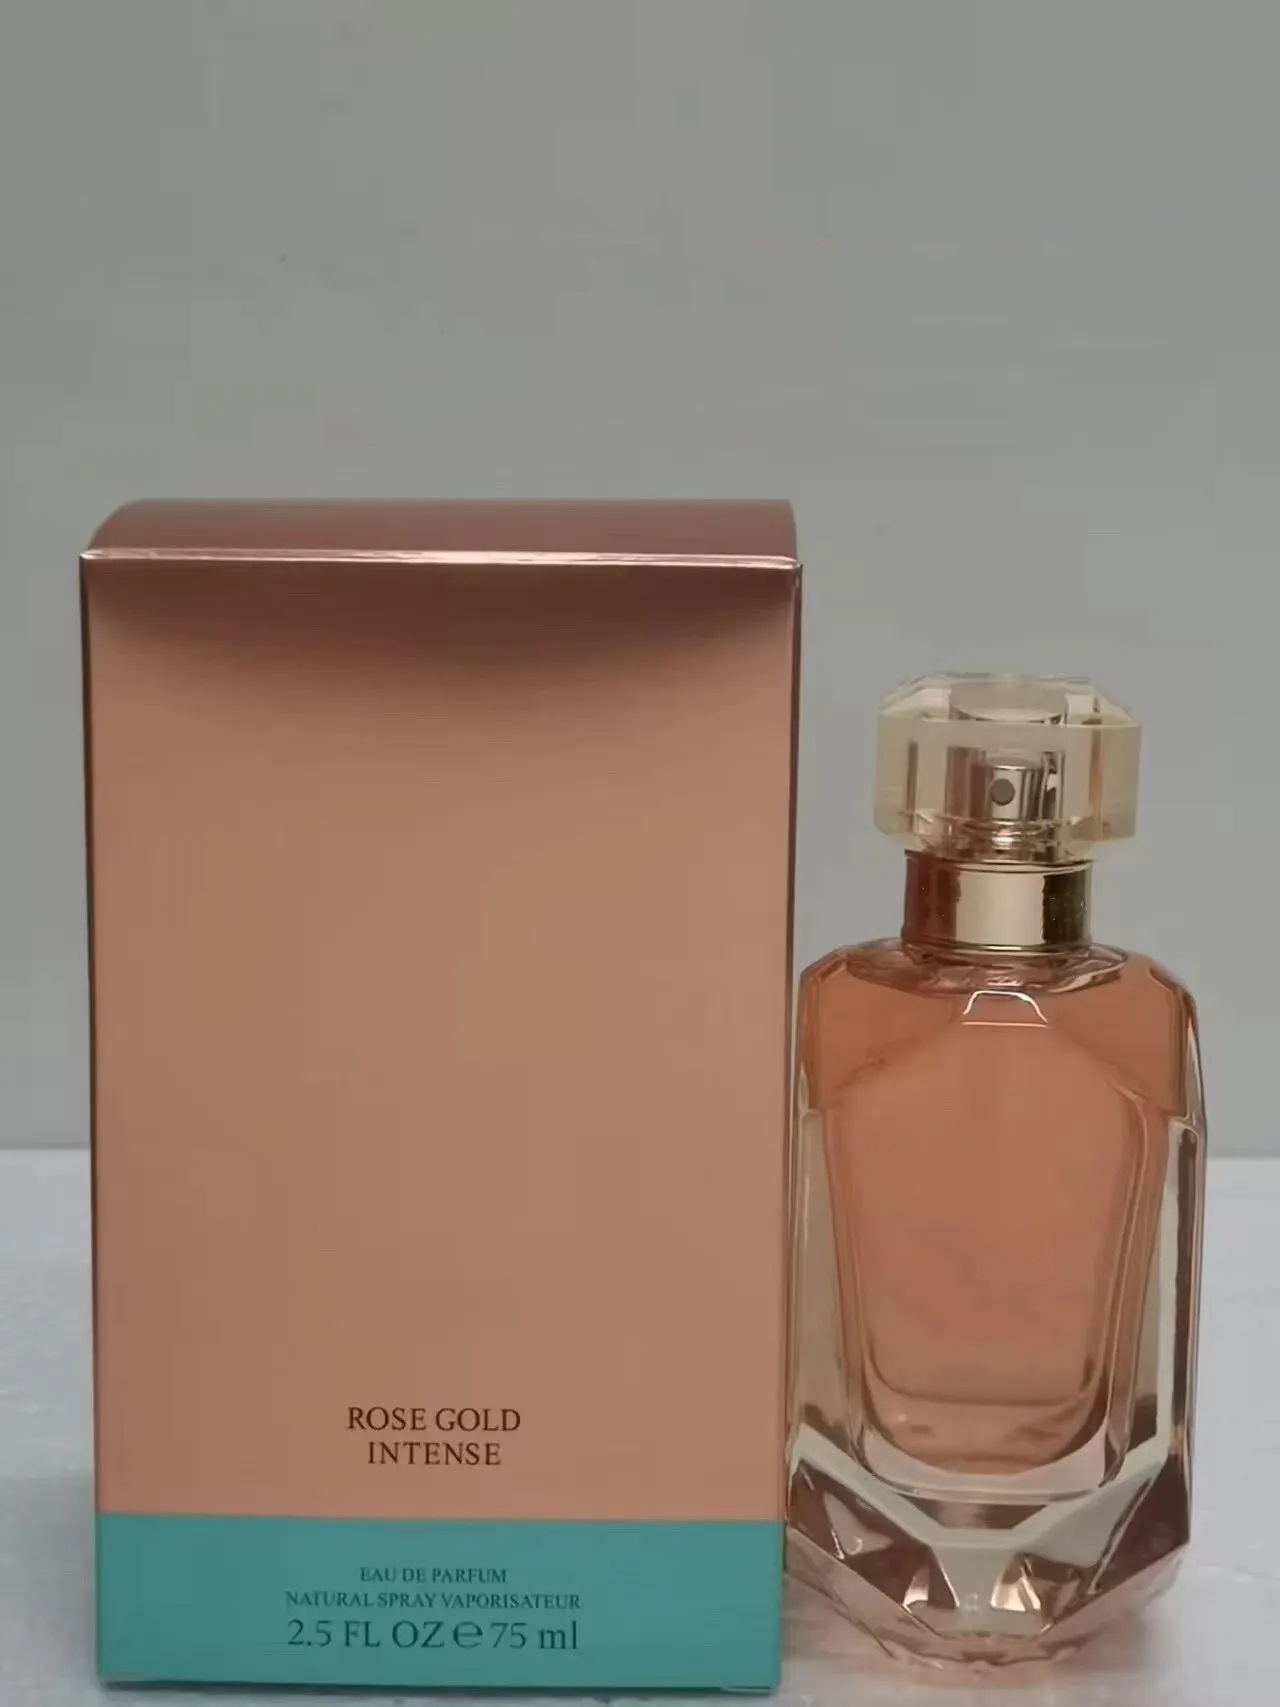 Amazing smells Woman perfumes sexy fragrance spray ROSE GOLD 75ml diamond Delina eau de parfum La Rosee Perfume charming royal essence fast ship